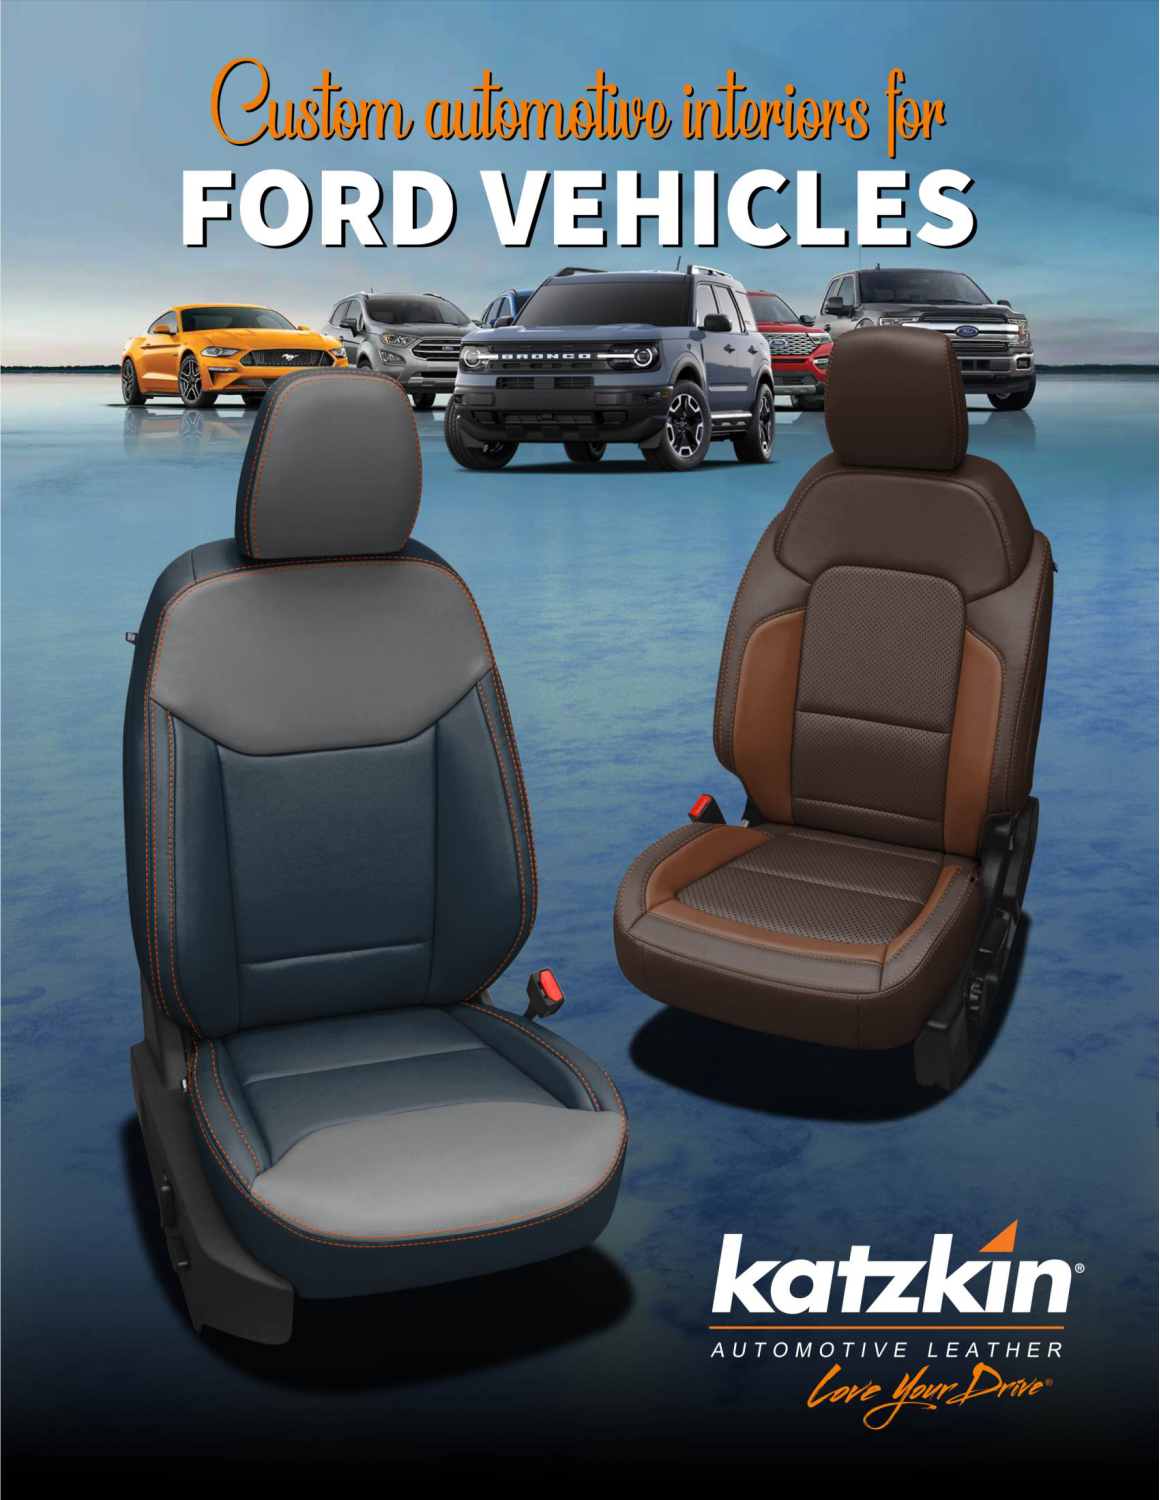 Ford Seat Covers Leather Seats Leather Car Seats Interior Katzkin